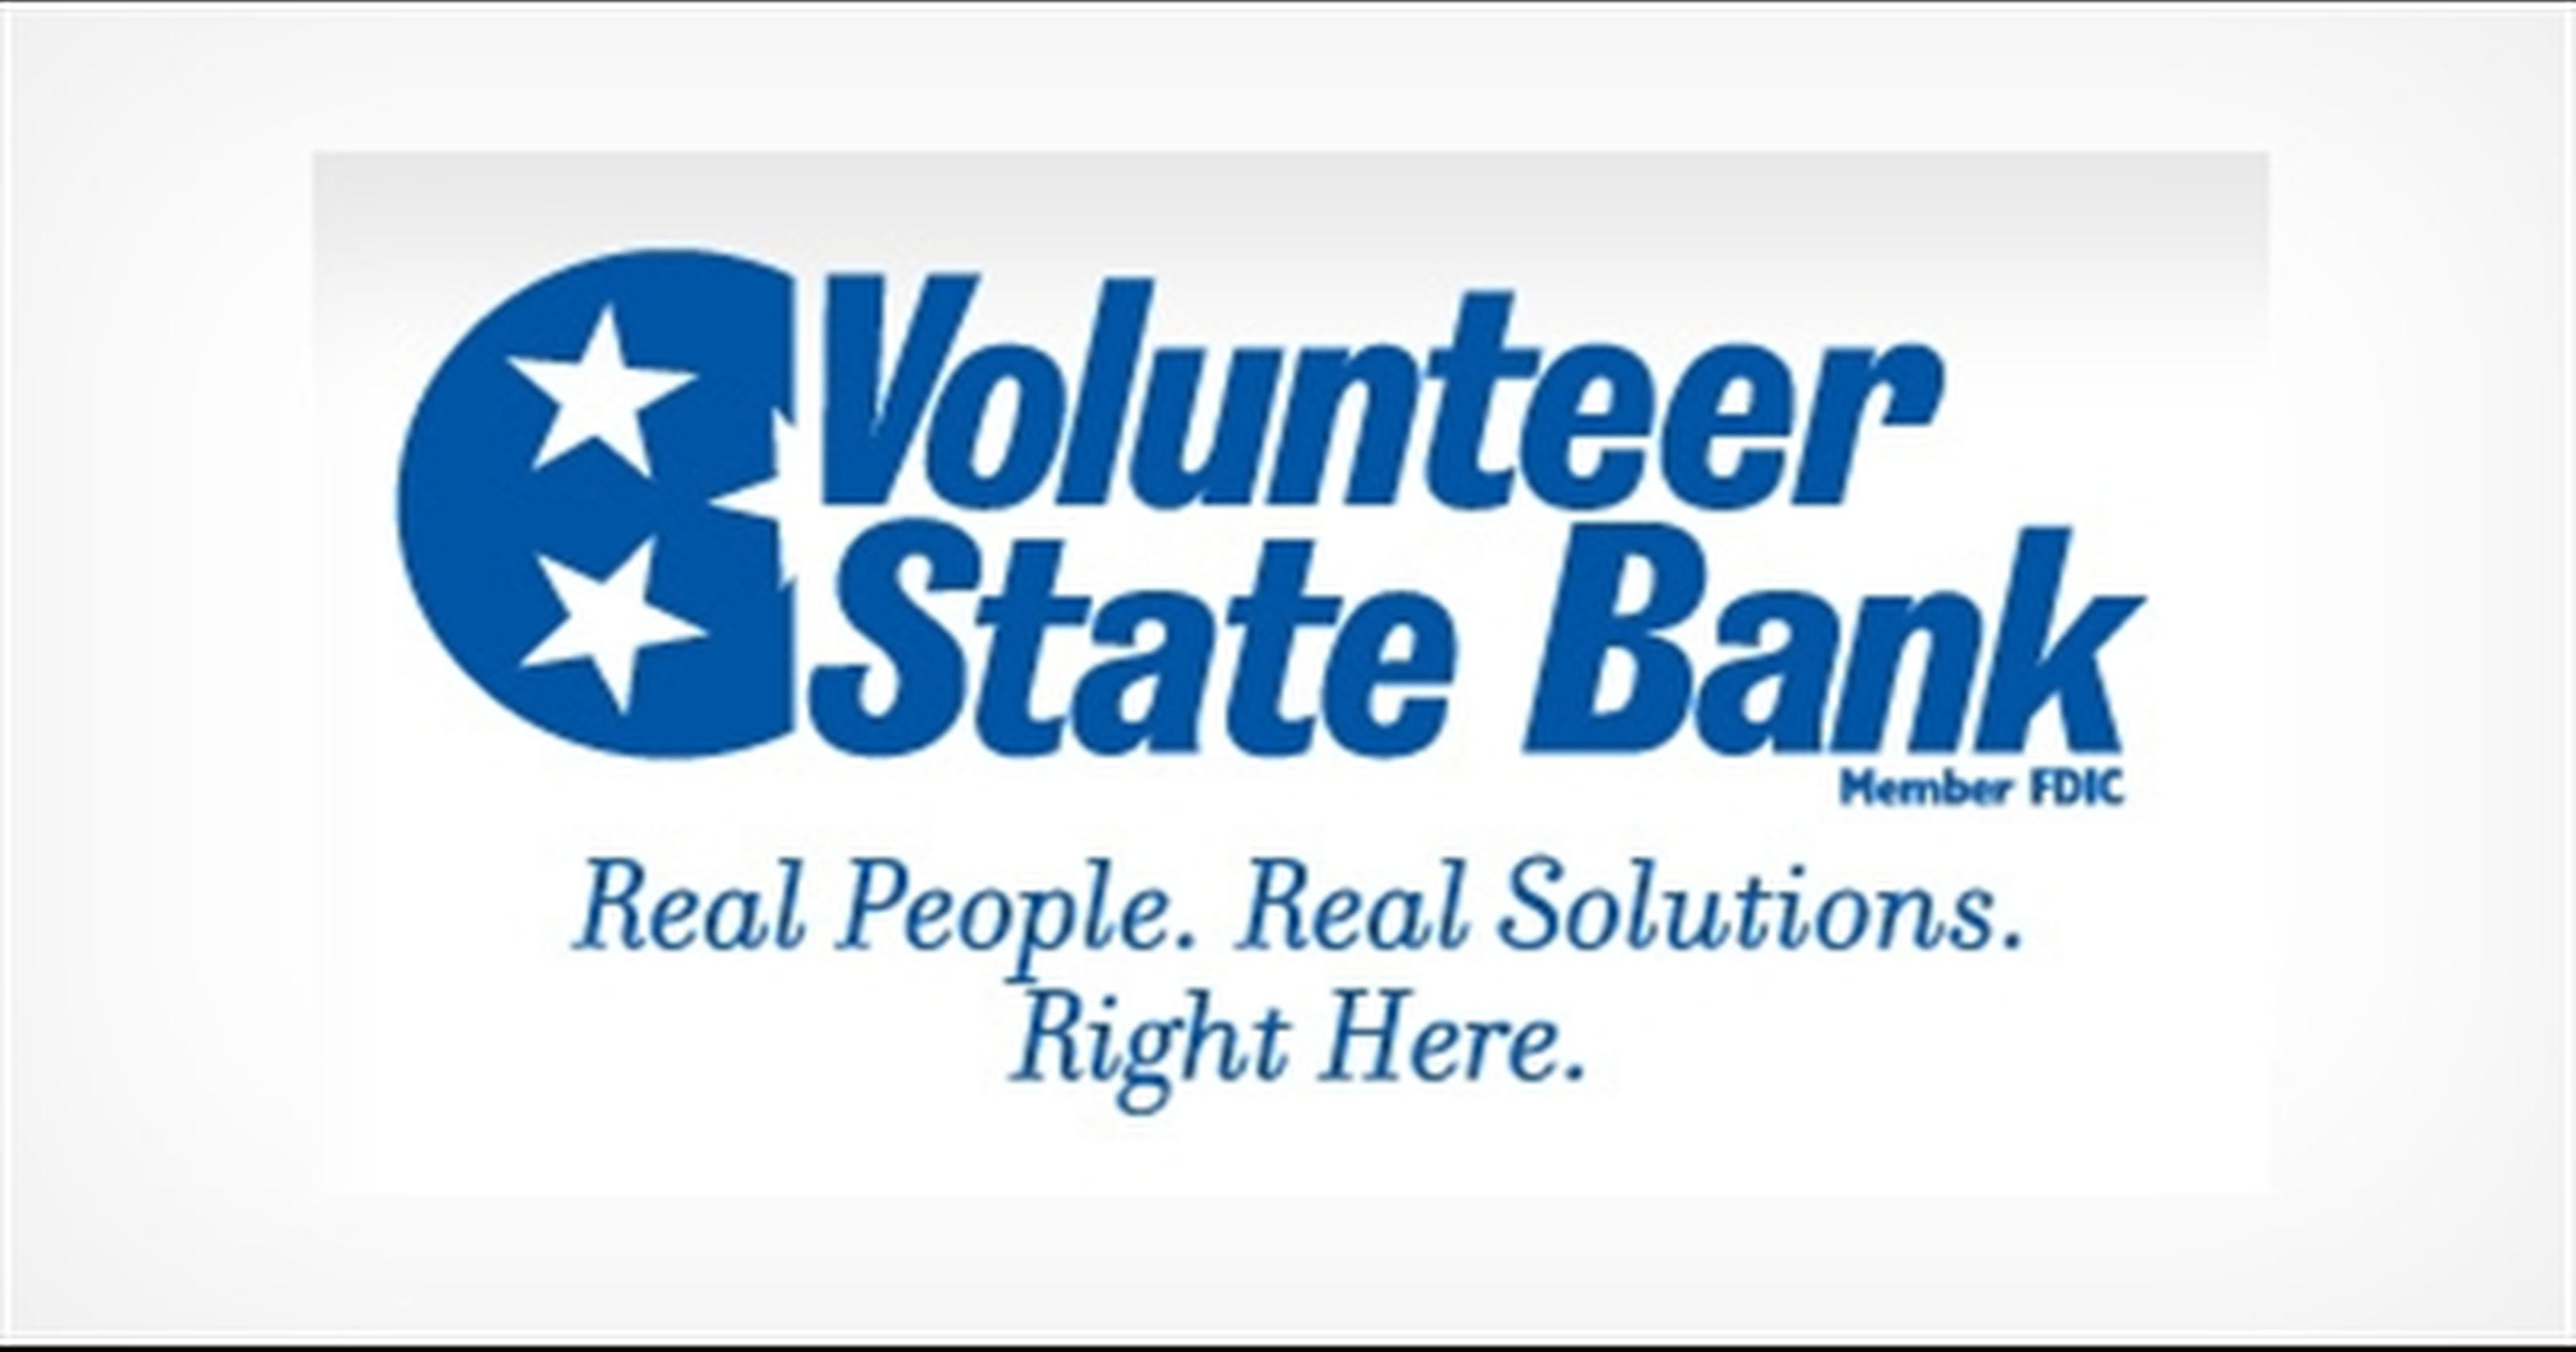 Portland, TNbased Volunteer State Bank sold to Gaylon Lawrence